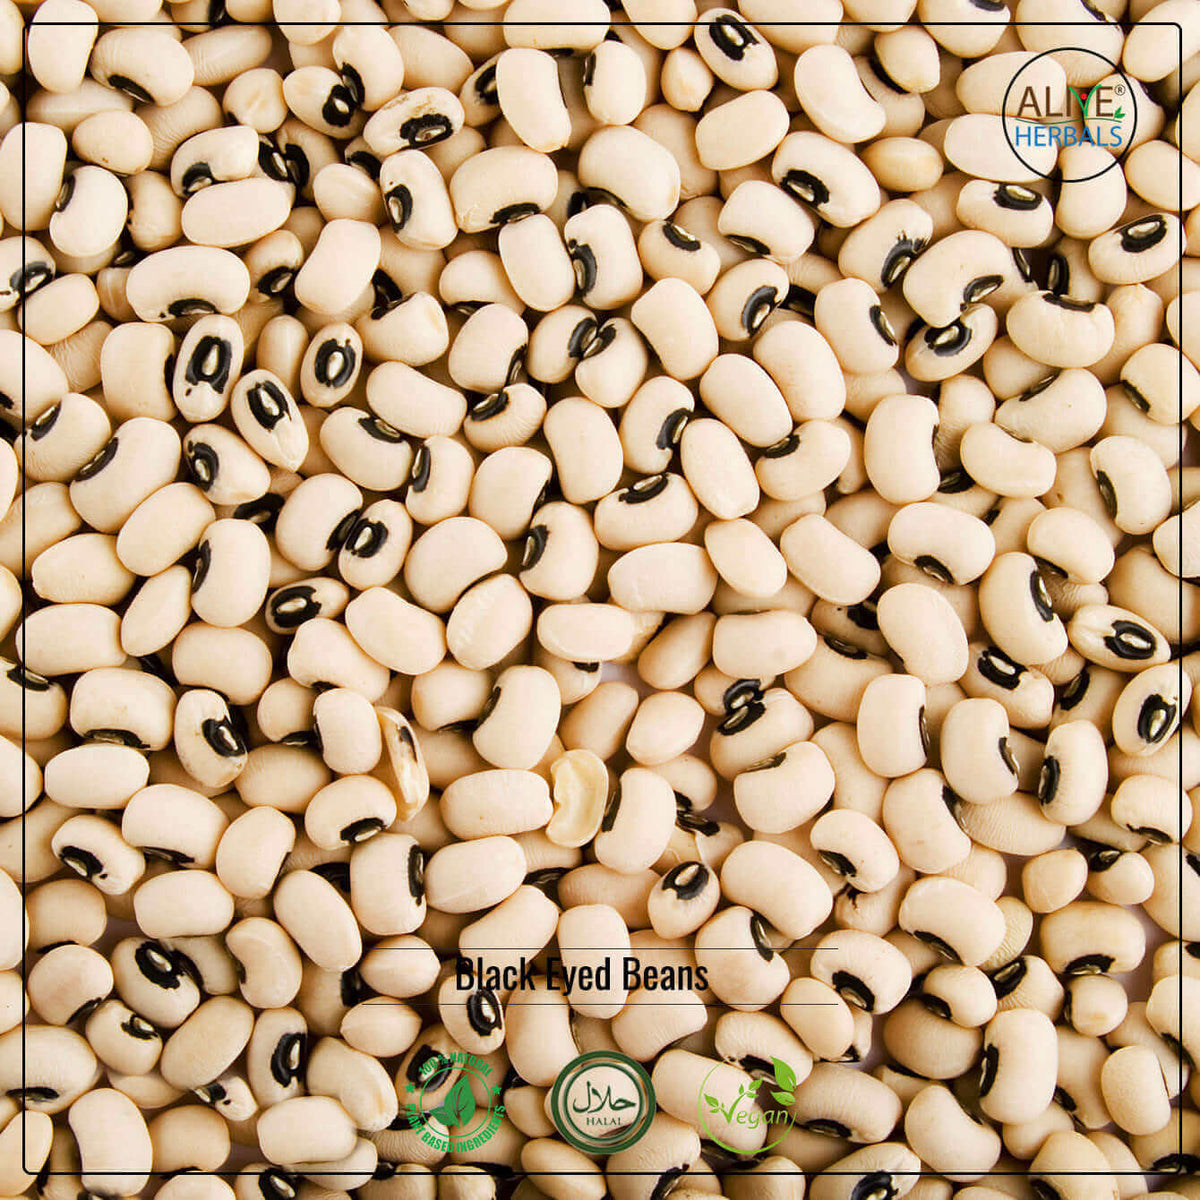 Black Eyed Beans - Shop at Natural Food Store | Alive Herbals.